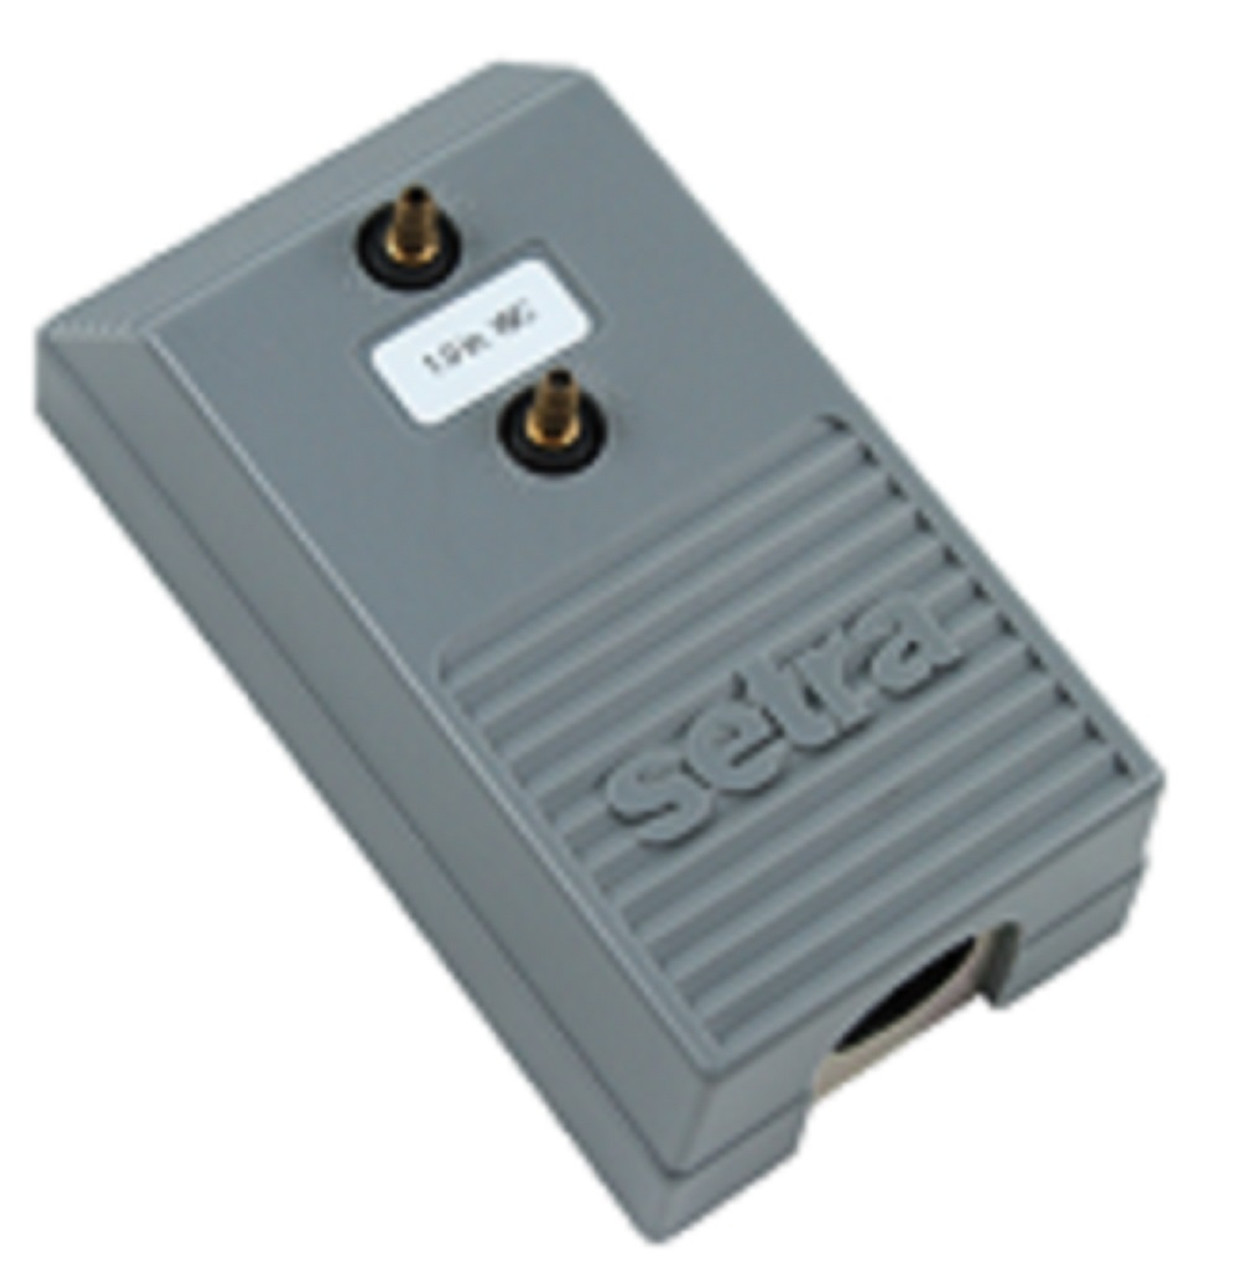 Setra 2641005WD2DA1C DPT2640-005D-1 264 Series Differential Pressure Transmitter [New]